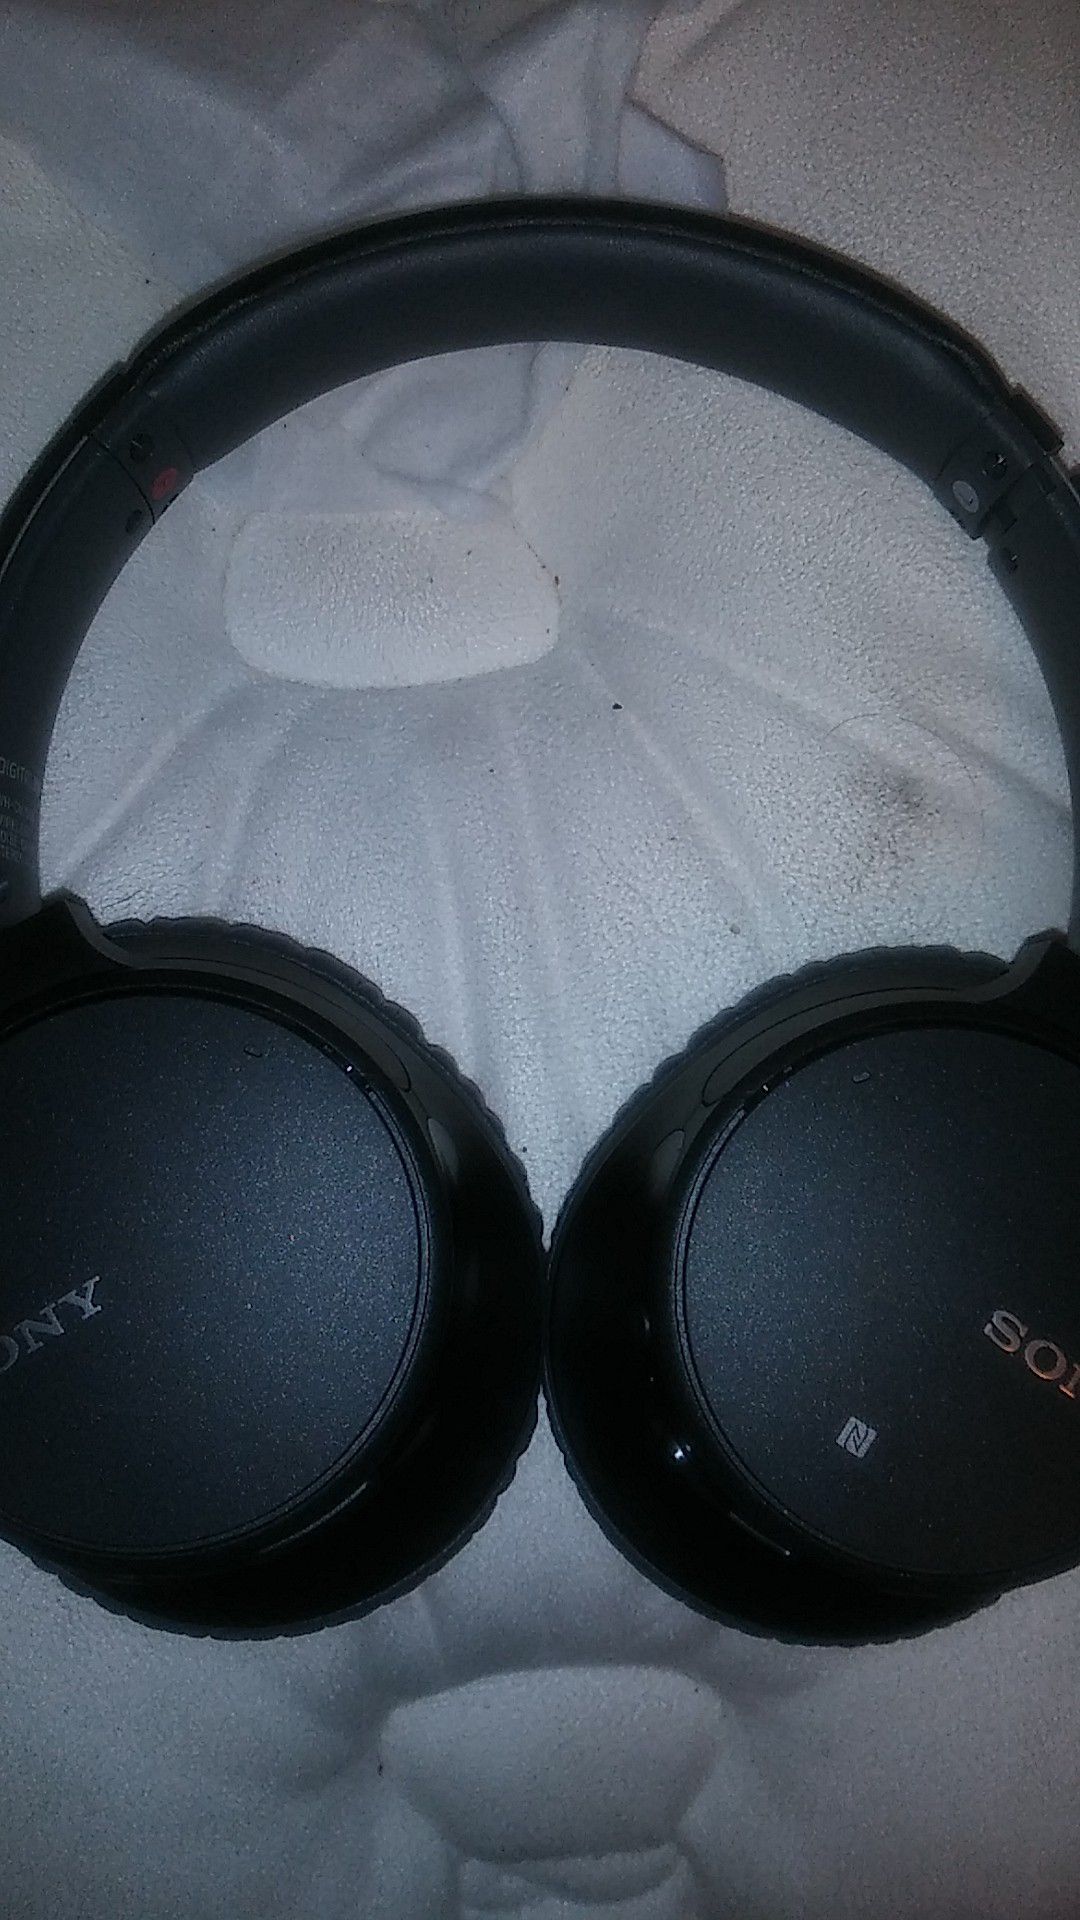 Sony wh-ch700n headphones